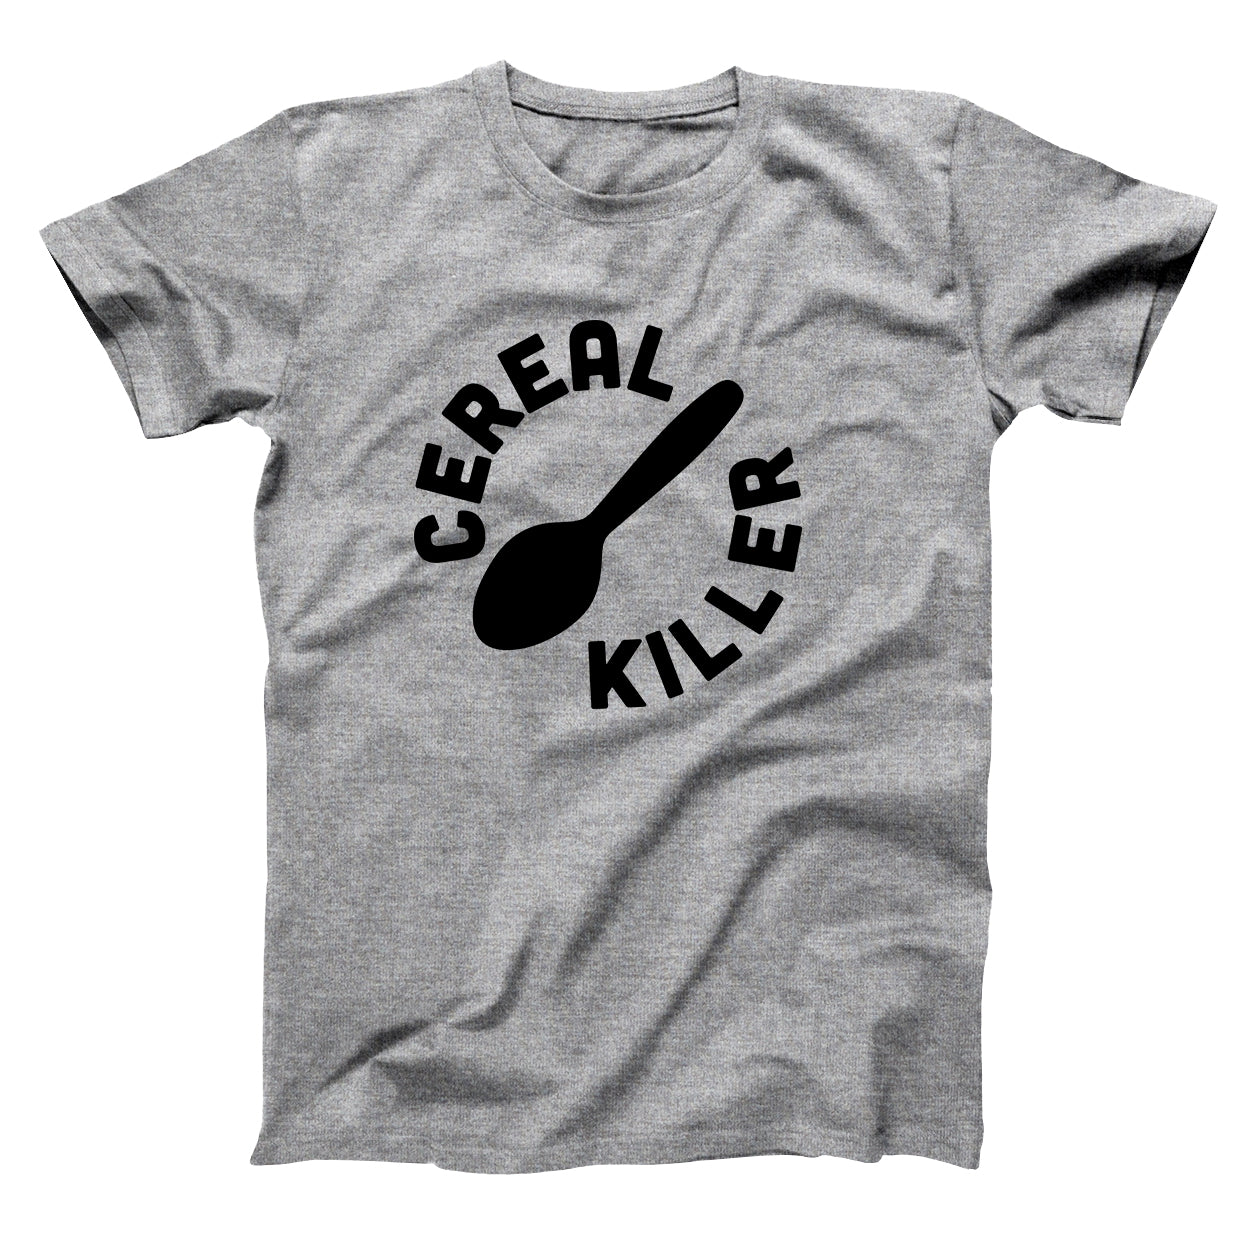 Cereal Killer Tshirt - Donkey Tees